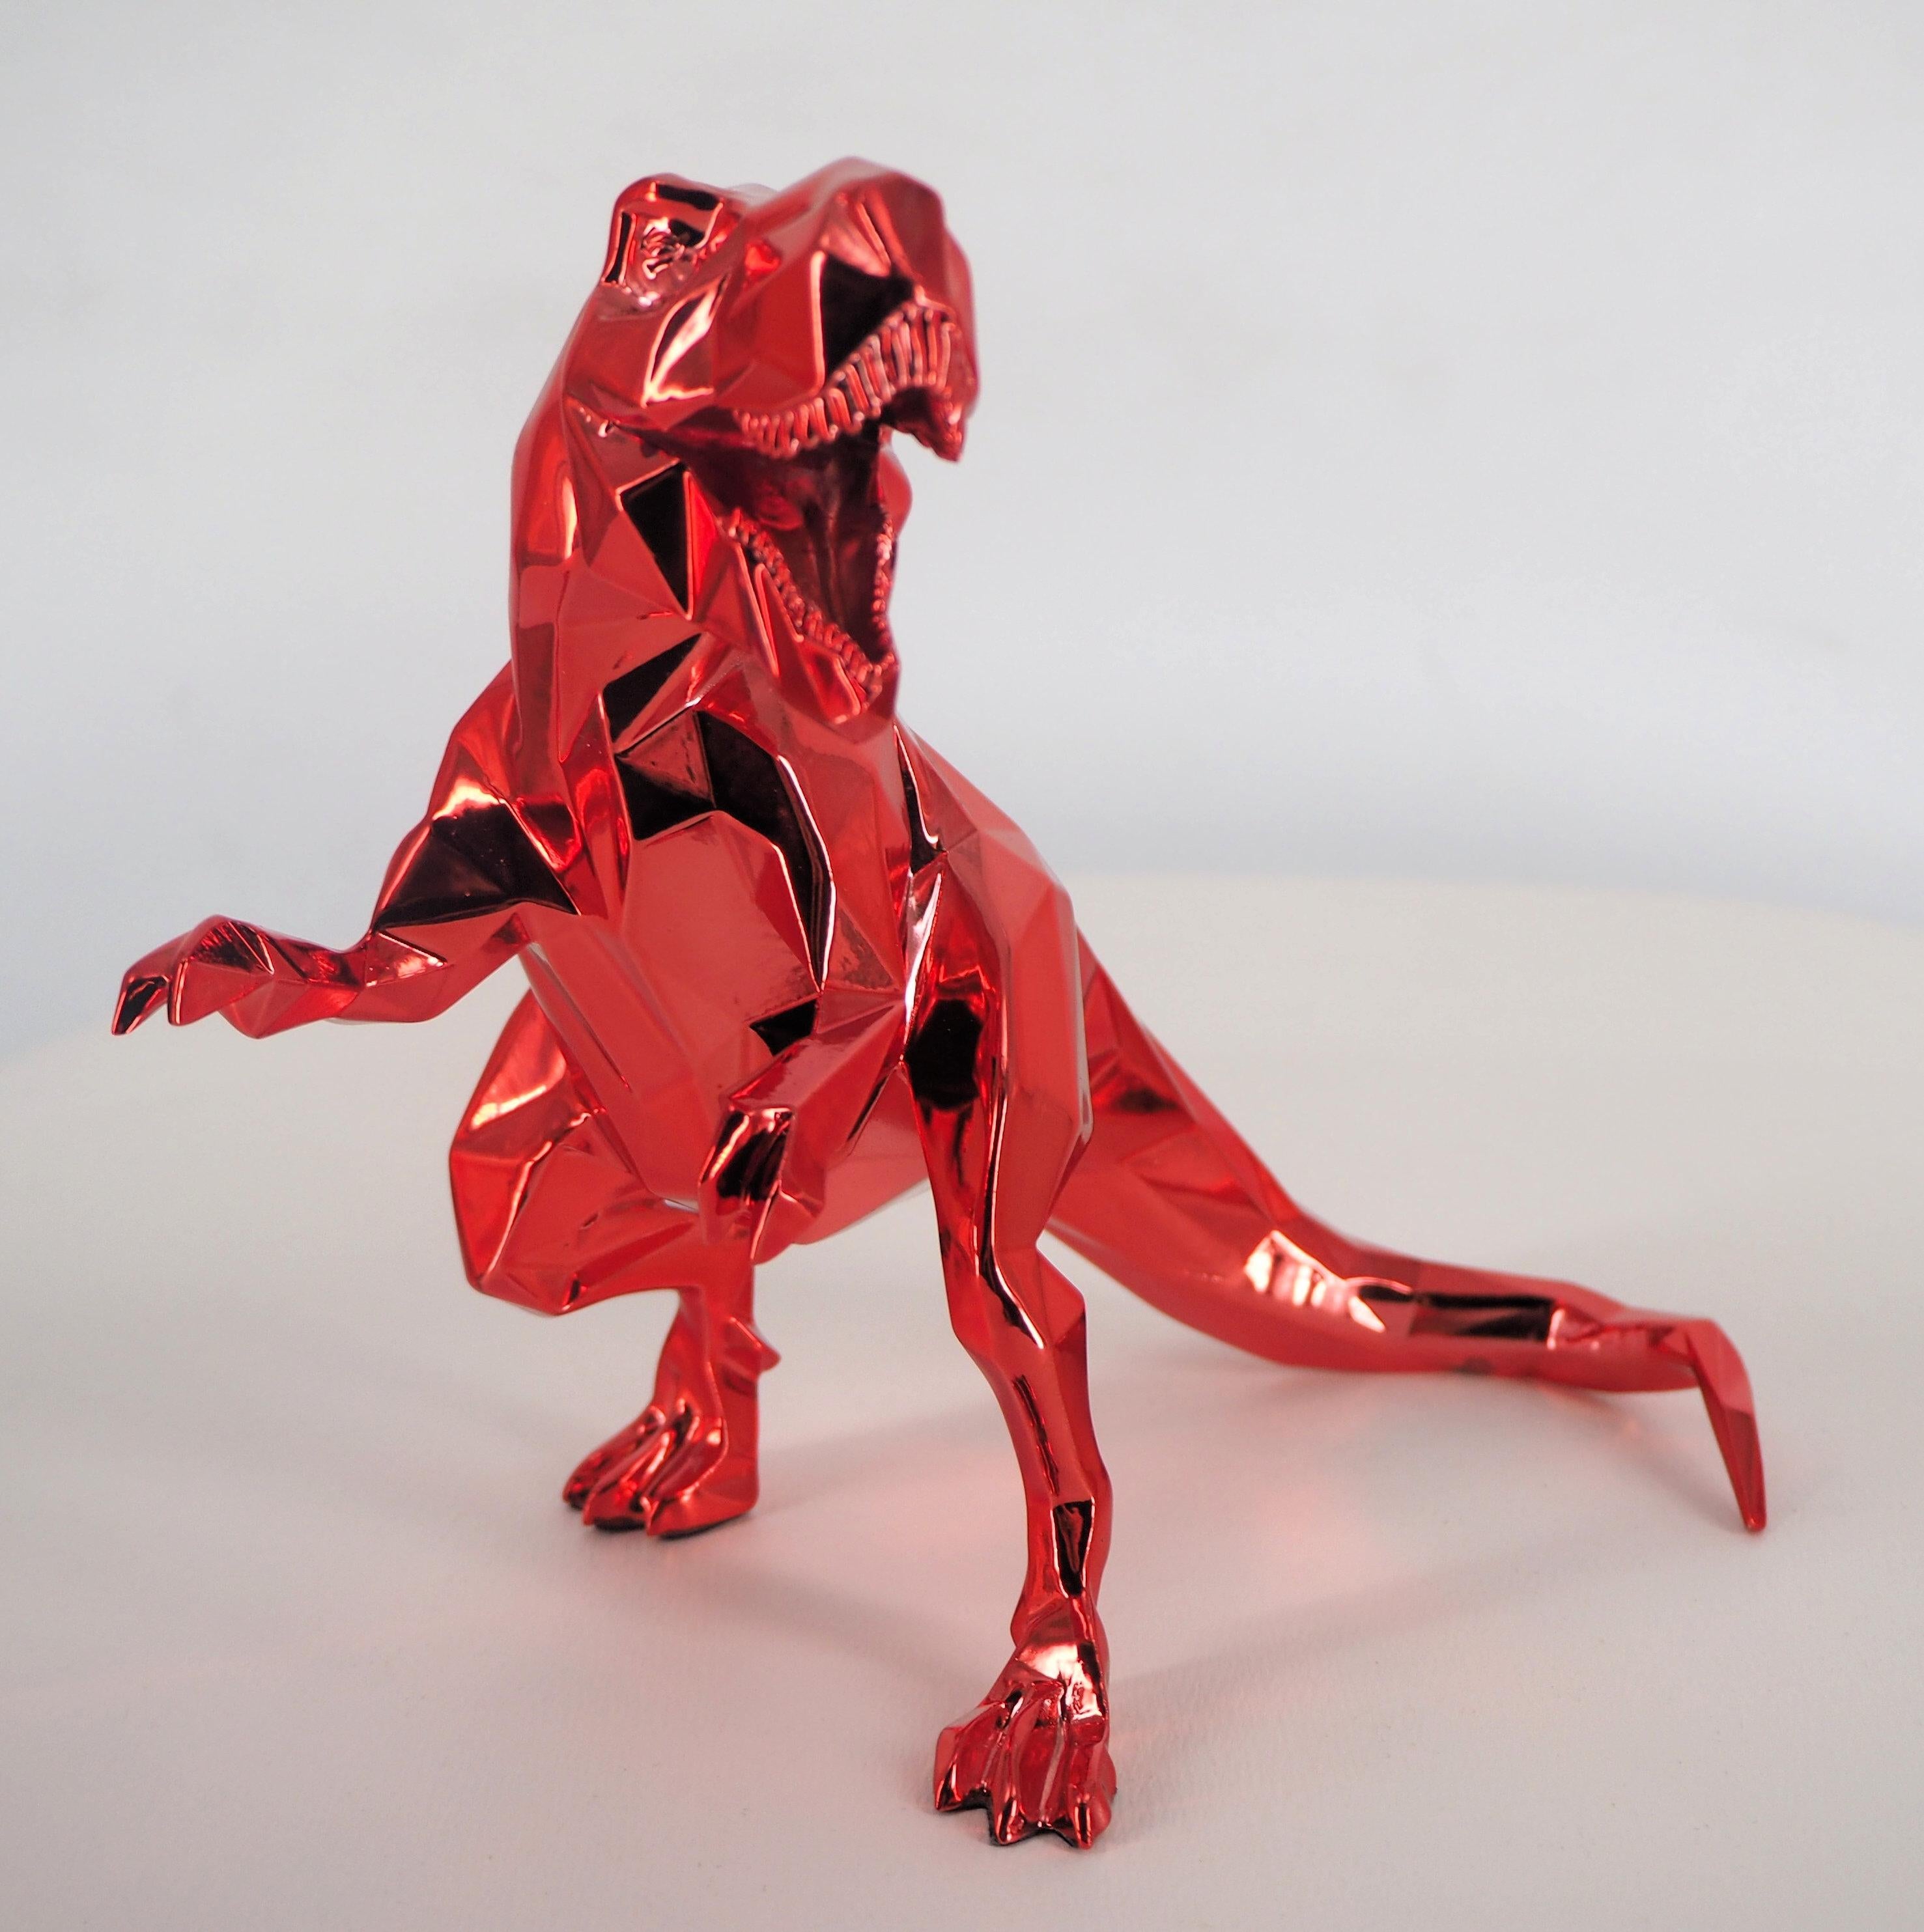 T-Rex (Red Edition) - Sculpture in original box with artist certificate